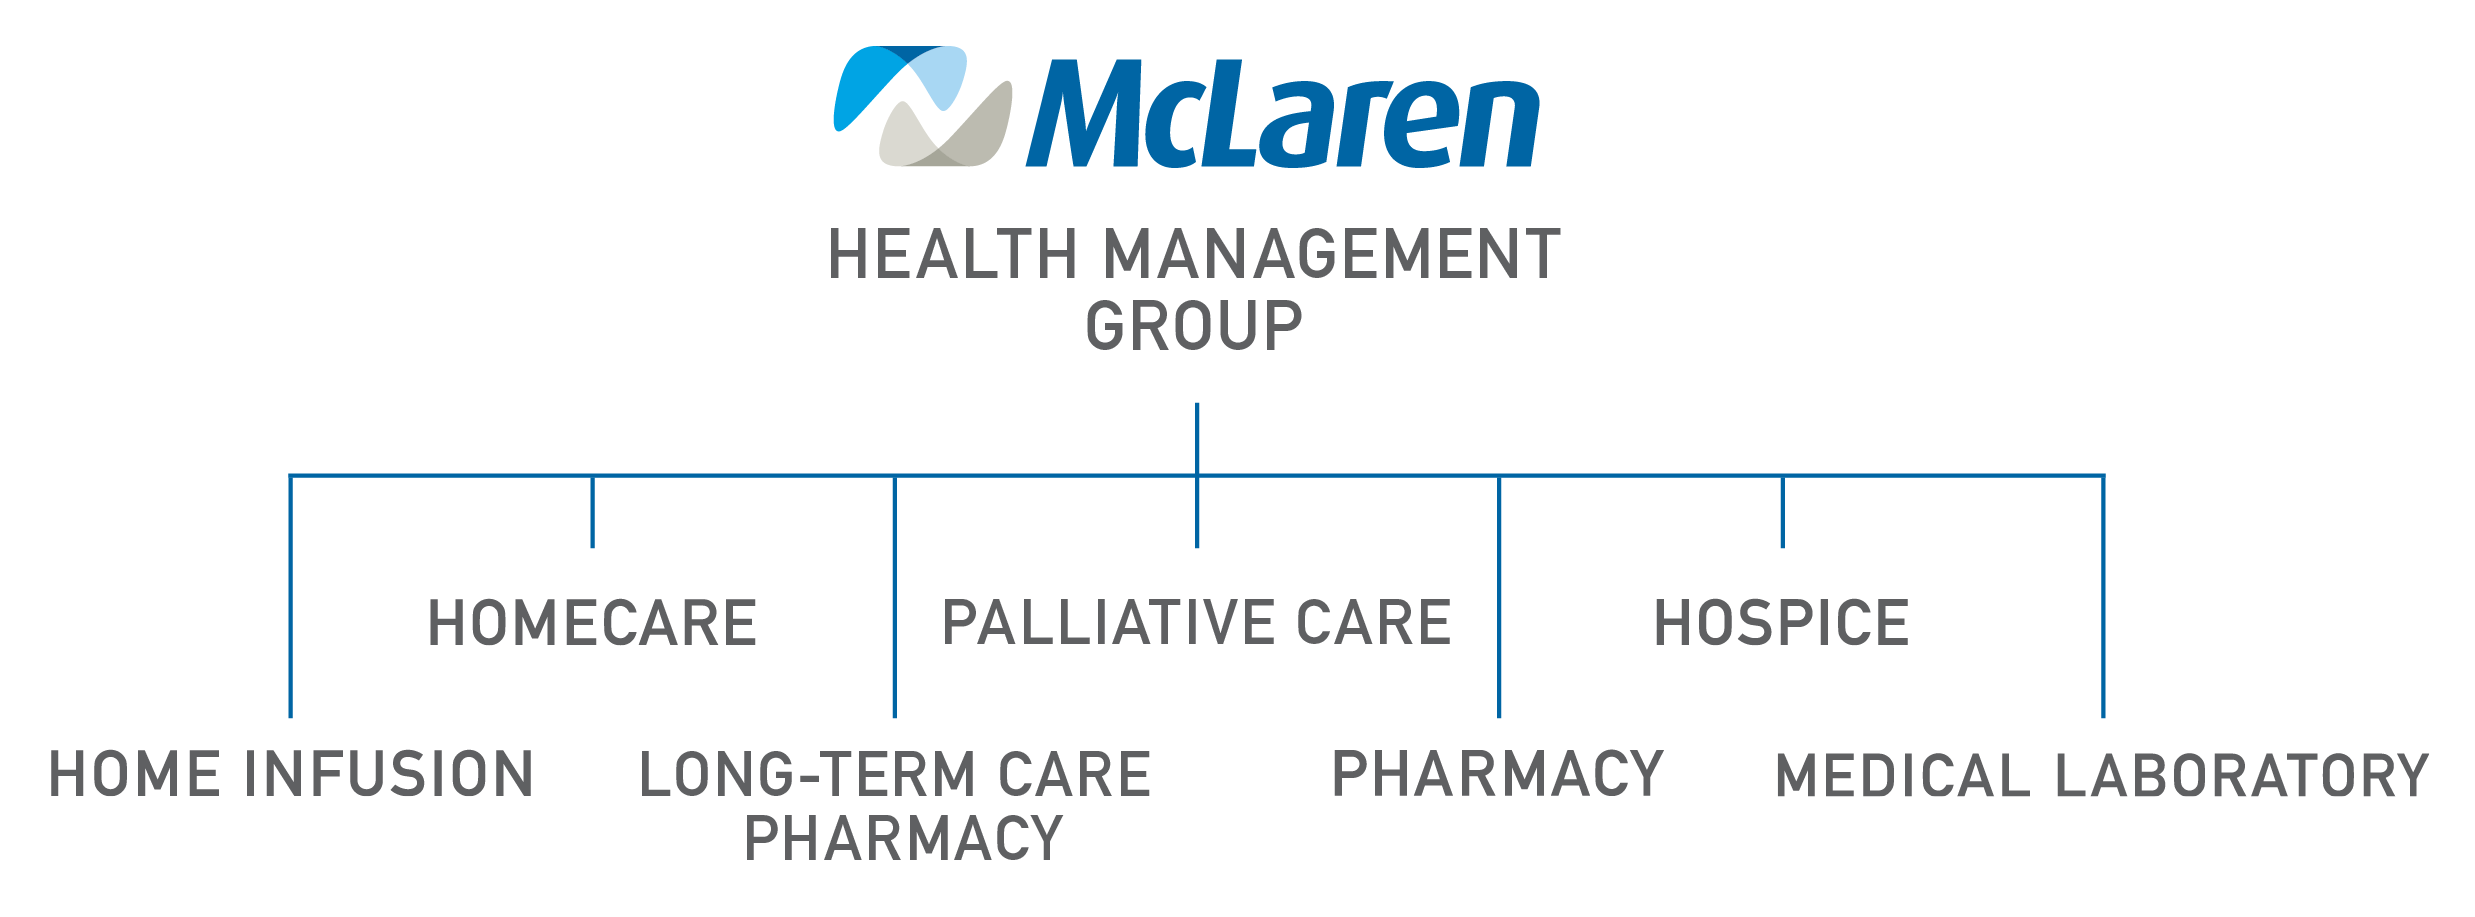 McLaren Health Management Group Divisions